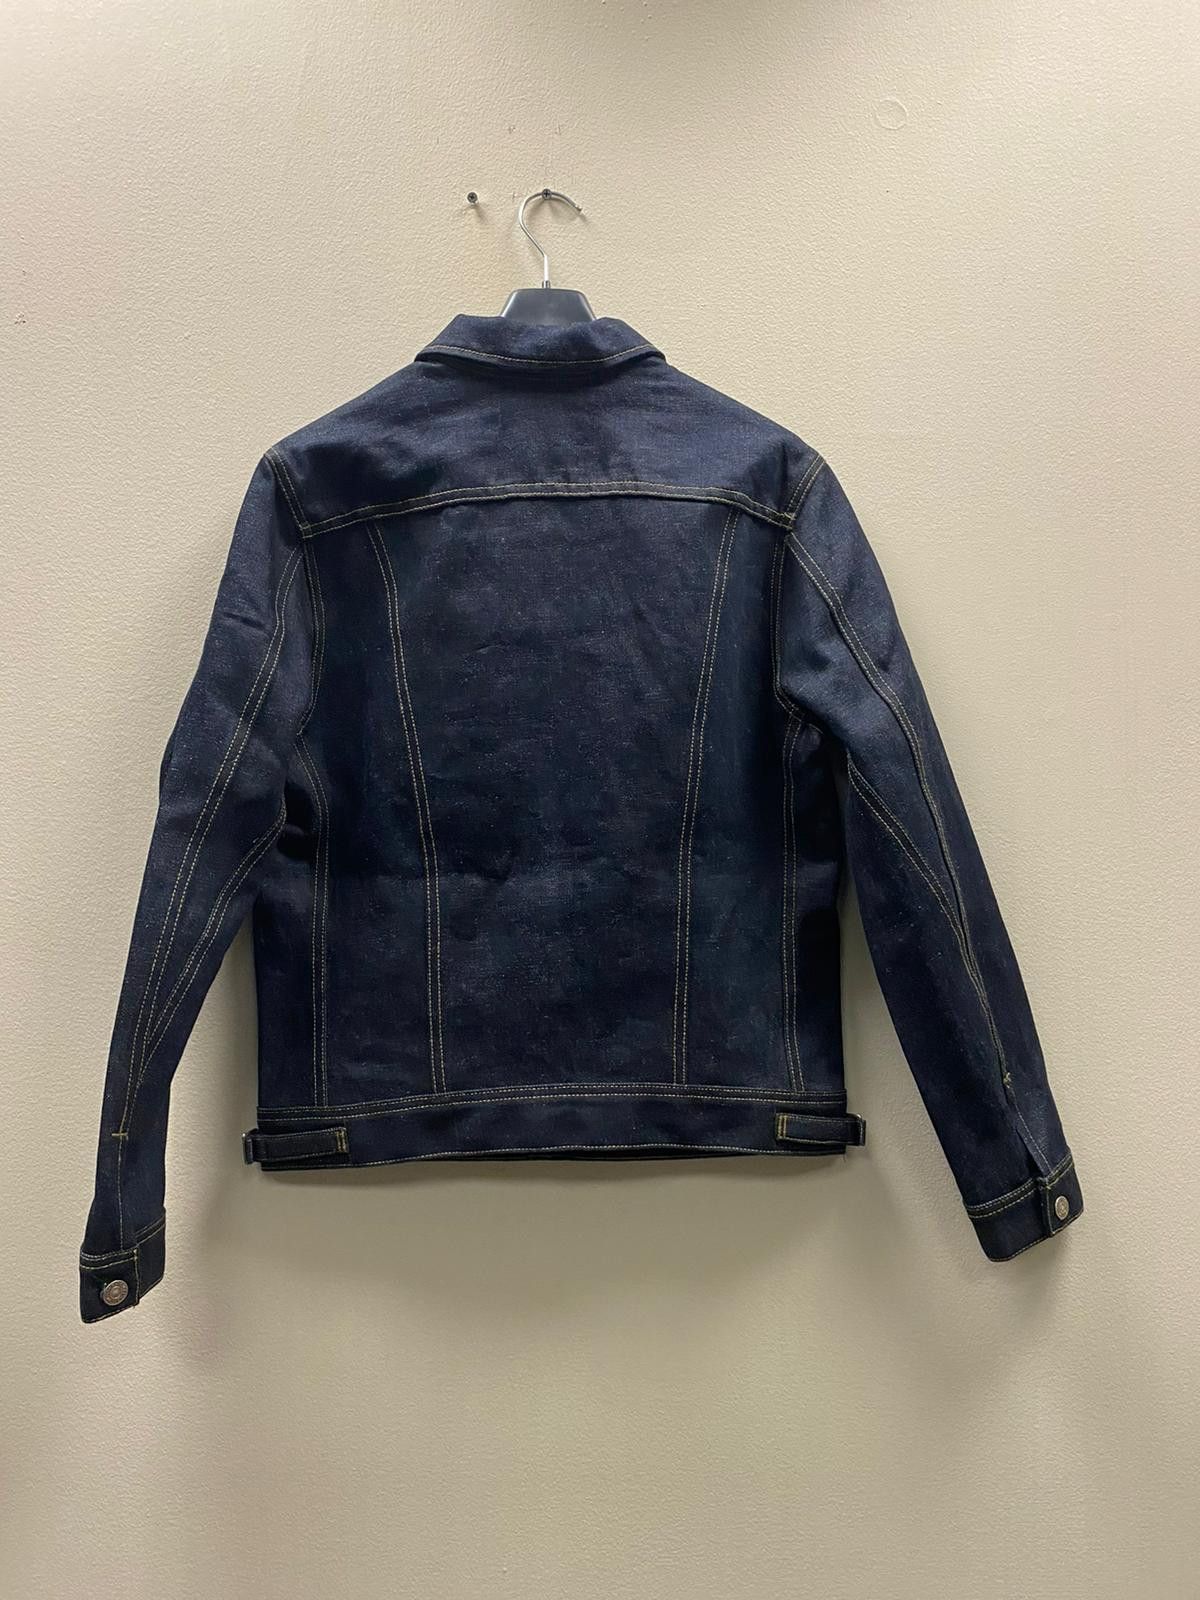 Tom Ford Classic Denim Jacket in Indigo Size US M / EU 48-50 / 2 - 14 Thumbnail